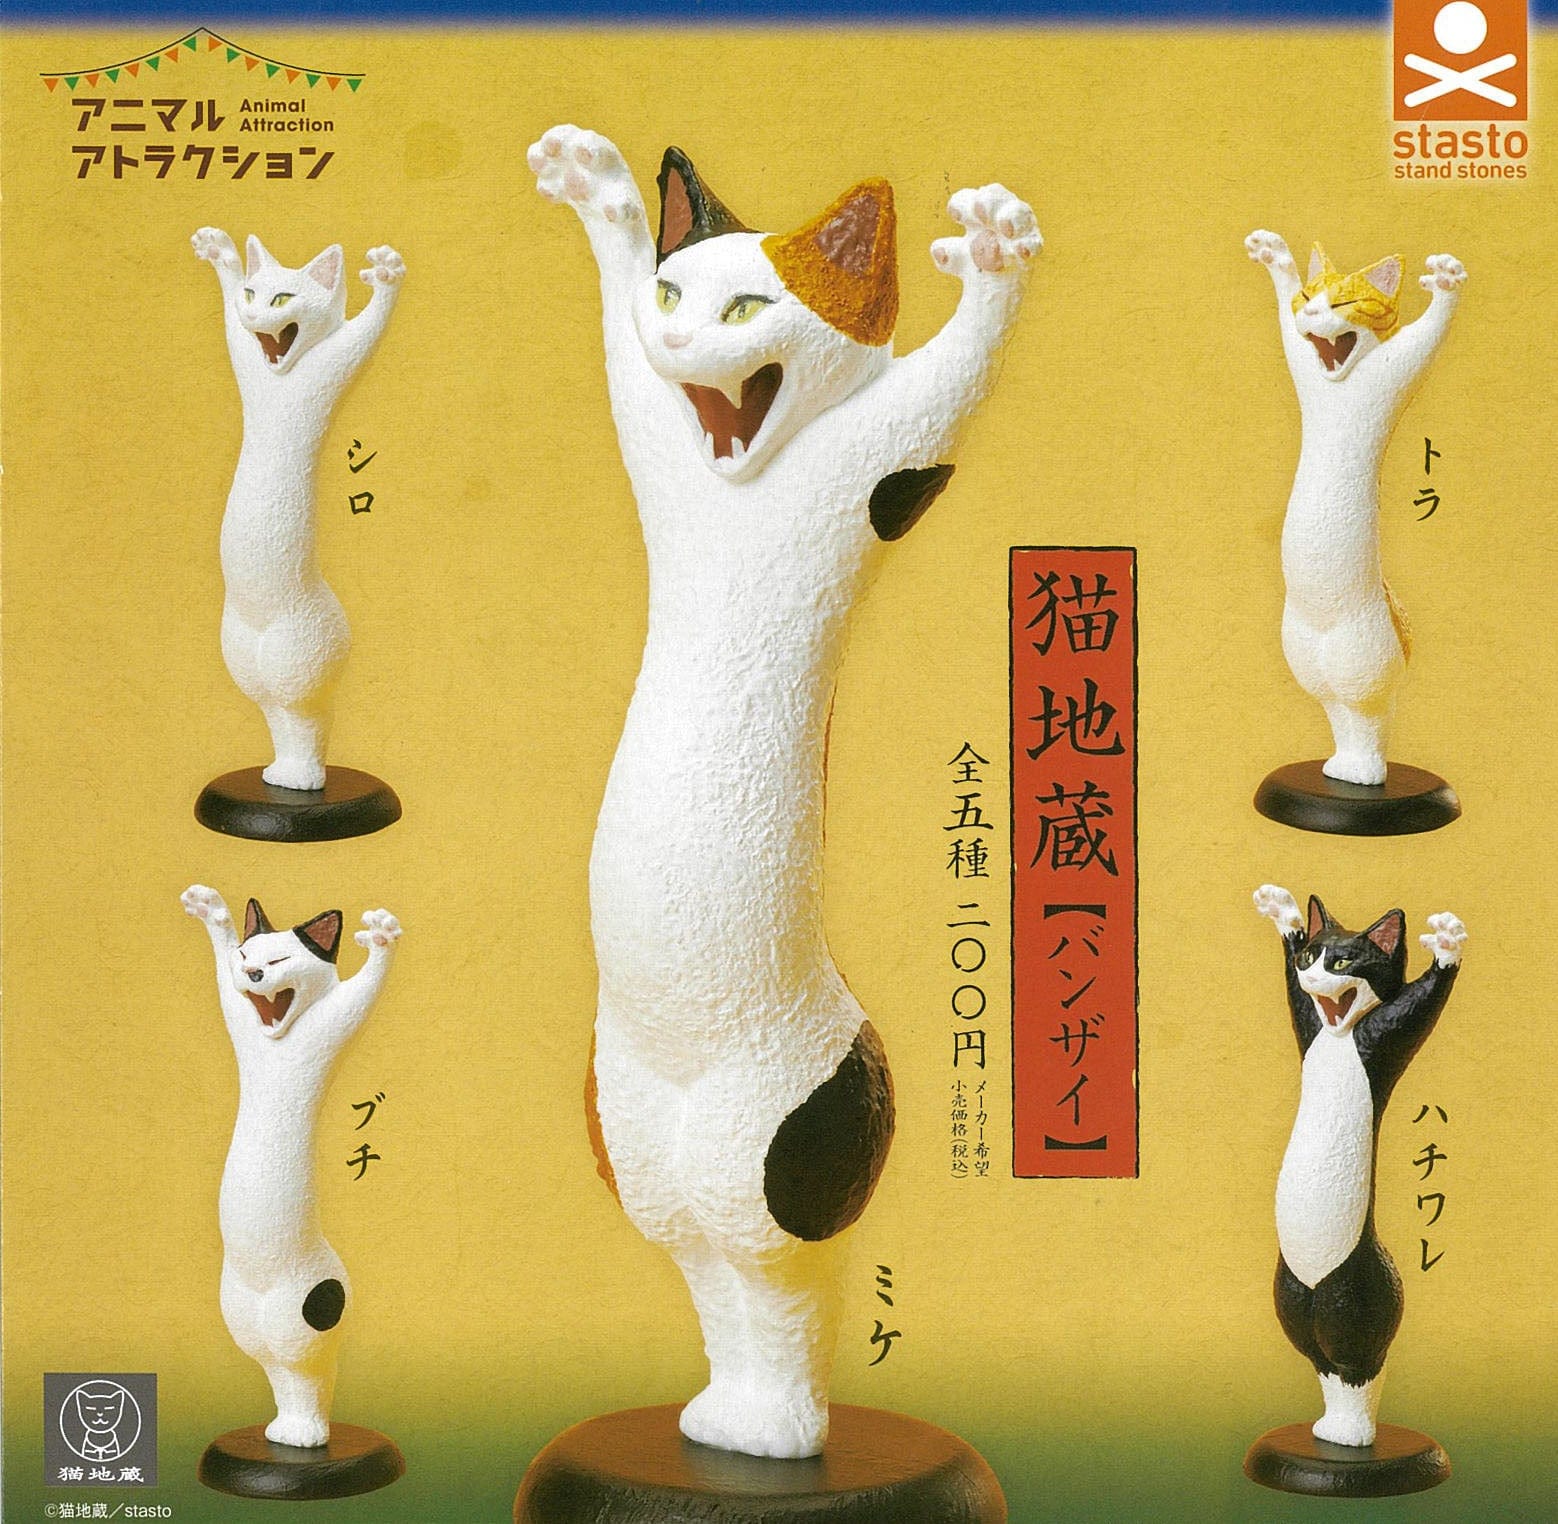 Stasto Stand Stone CP0138 - Animal Attraction Neko jizo Banzai - Complete Set